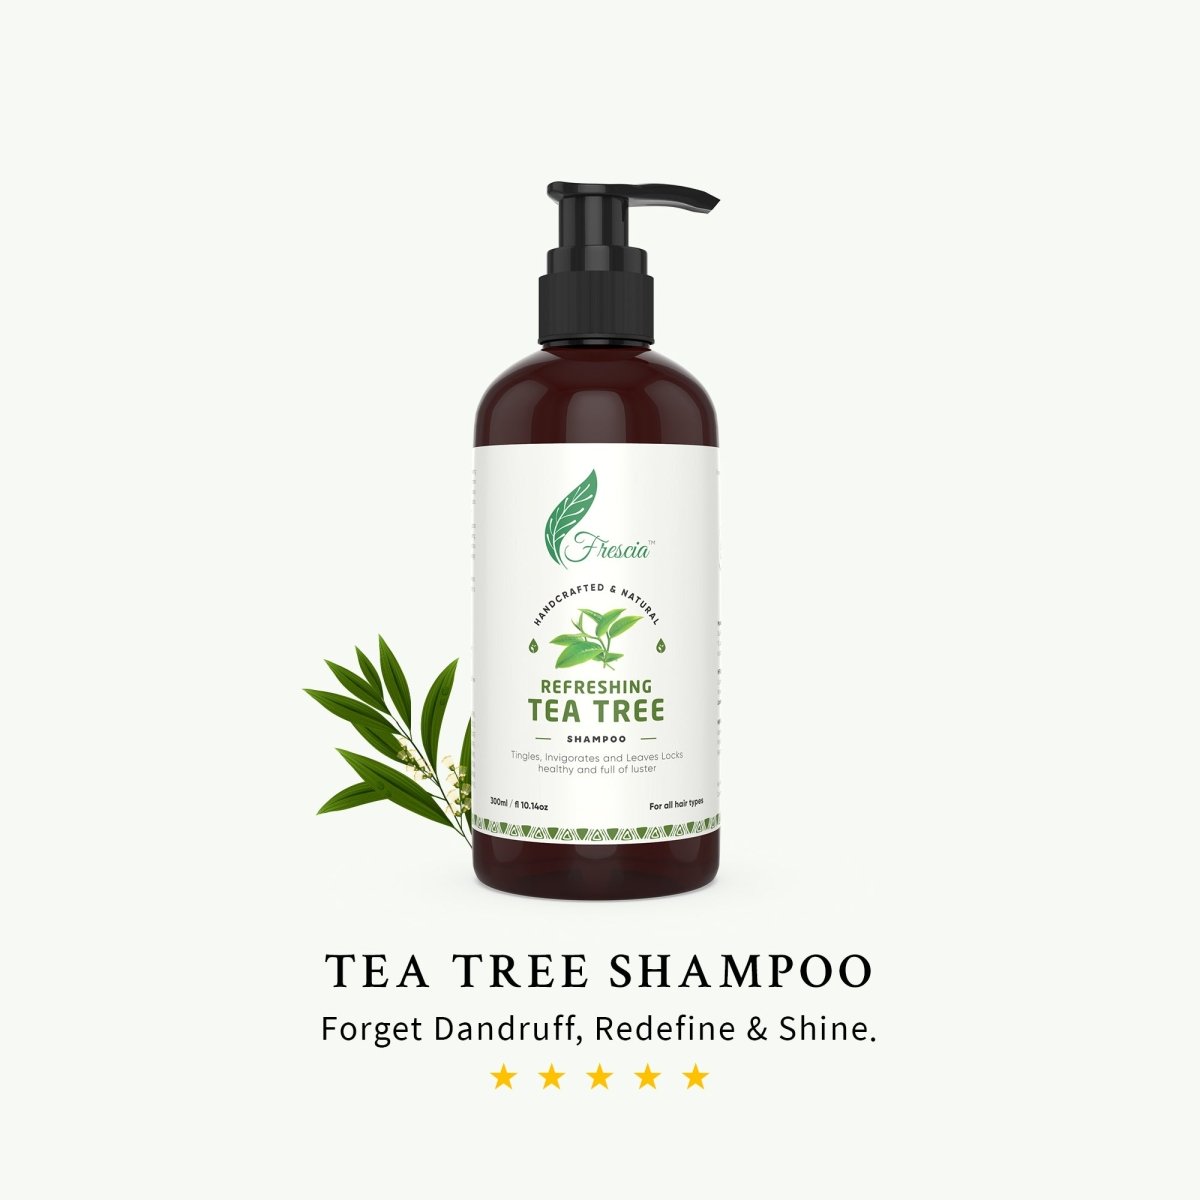 Refreshing Tea Tree Shampoo (300ml) - Kreate- Shampoos